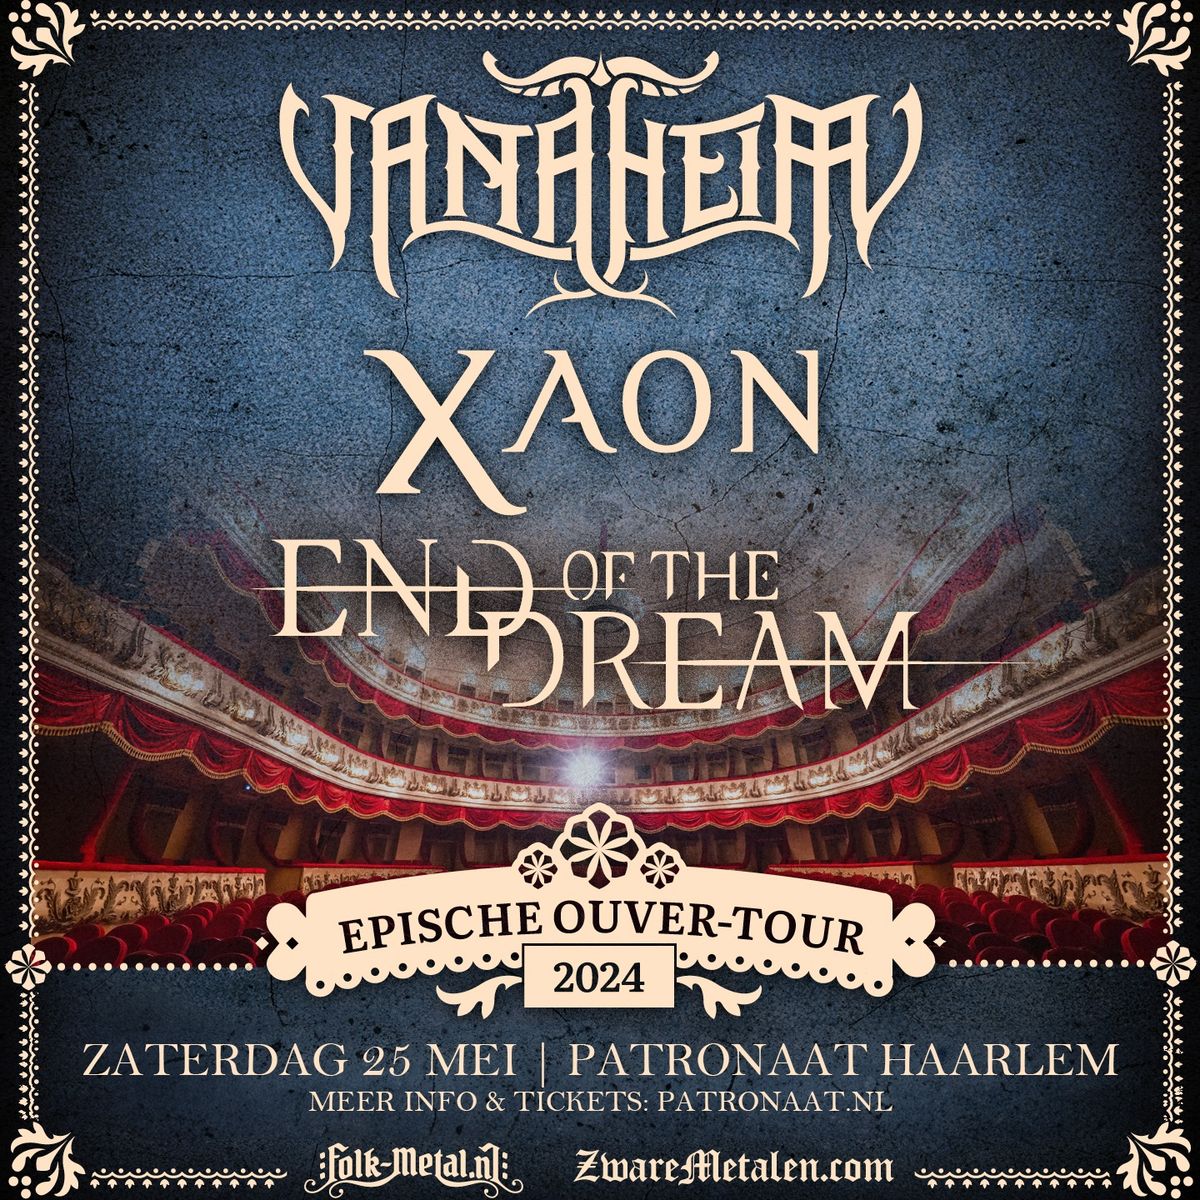  Vanaheim + Xaon + End Of The Dream | Patronaat Haarlem 